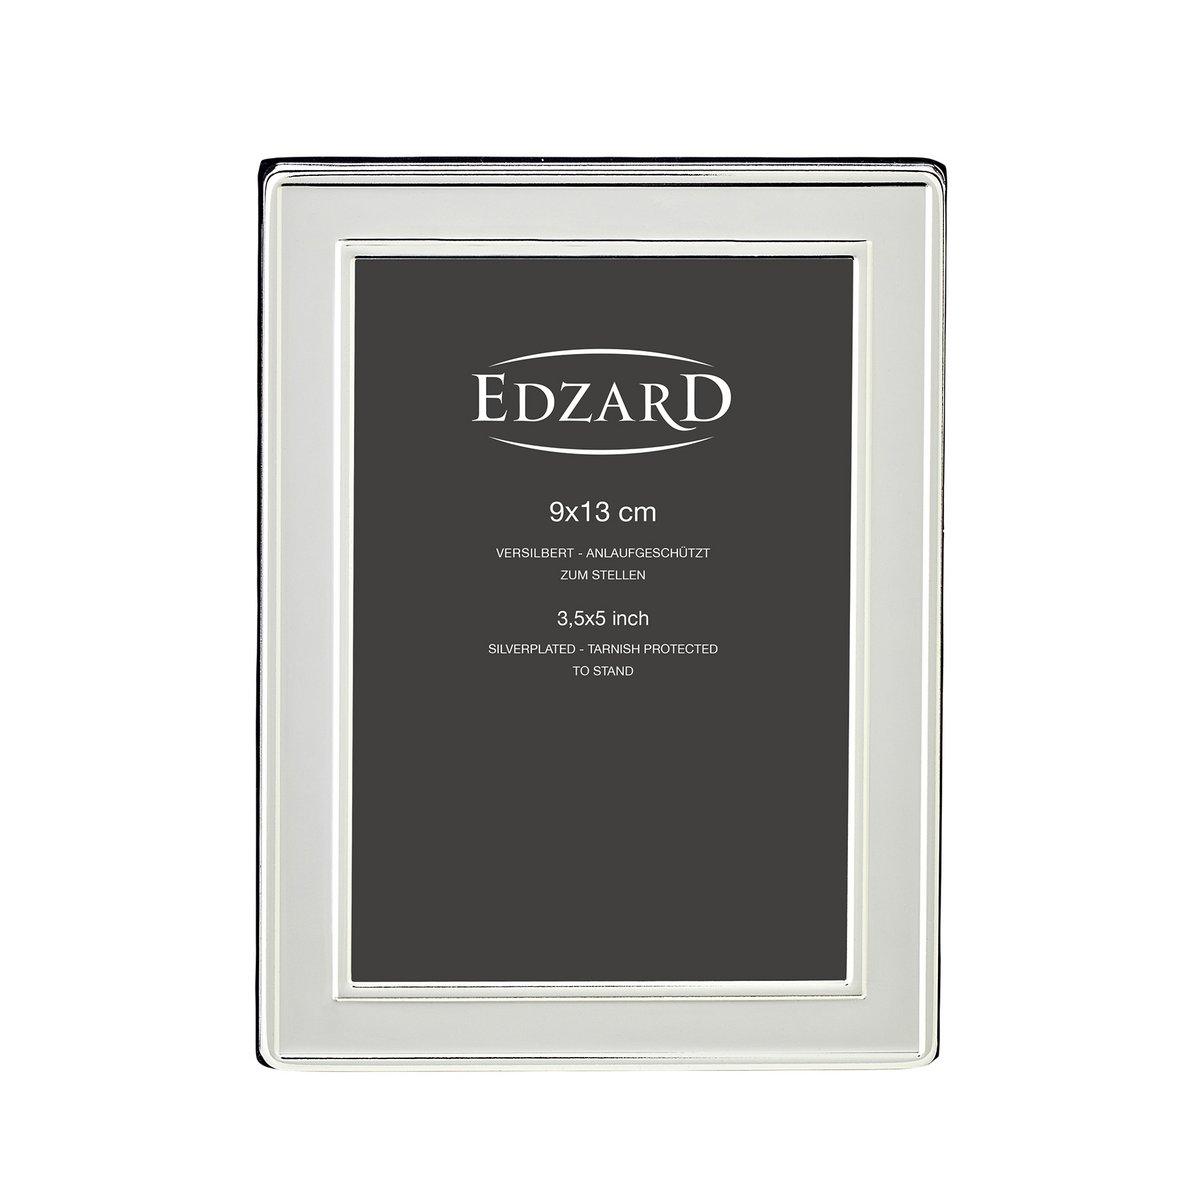 EDZARD Fotorahmen Bilderrahmen Nardo für Foto 9 x 13 cm, edel versilbert, anlaufgeschützt - HomeDesign Knaus